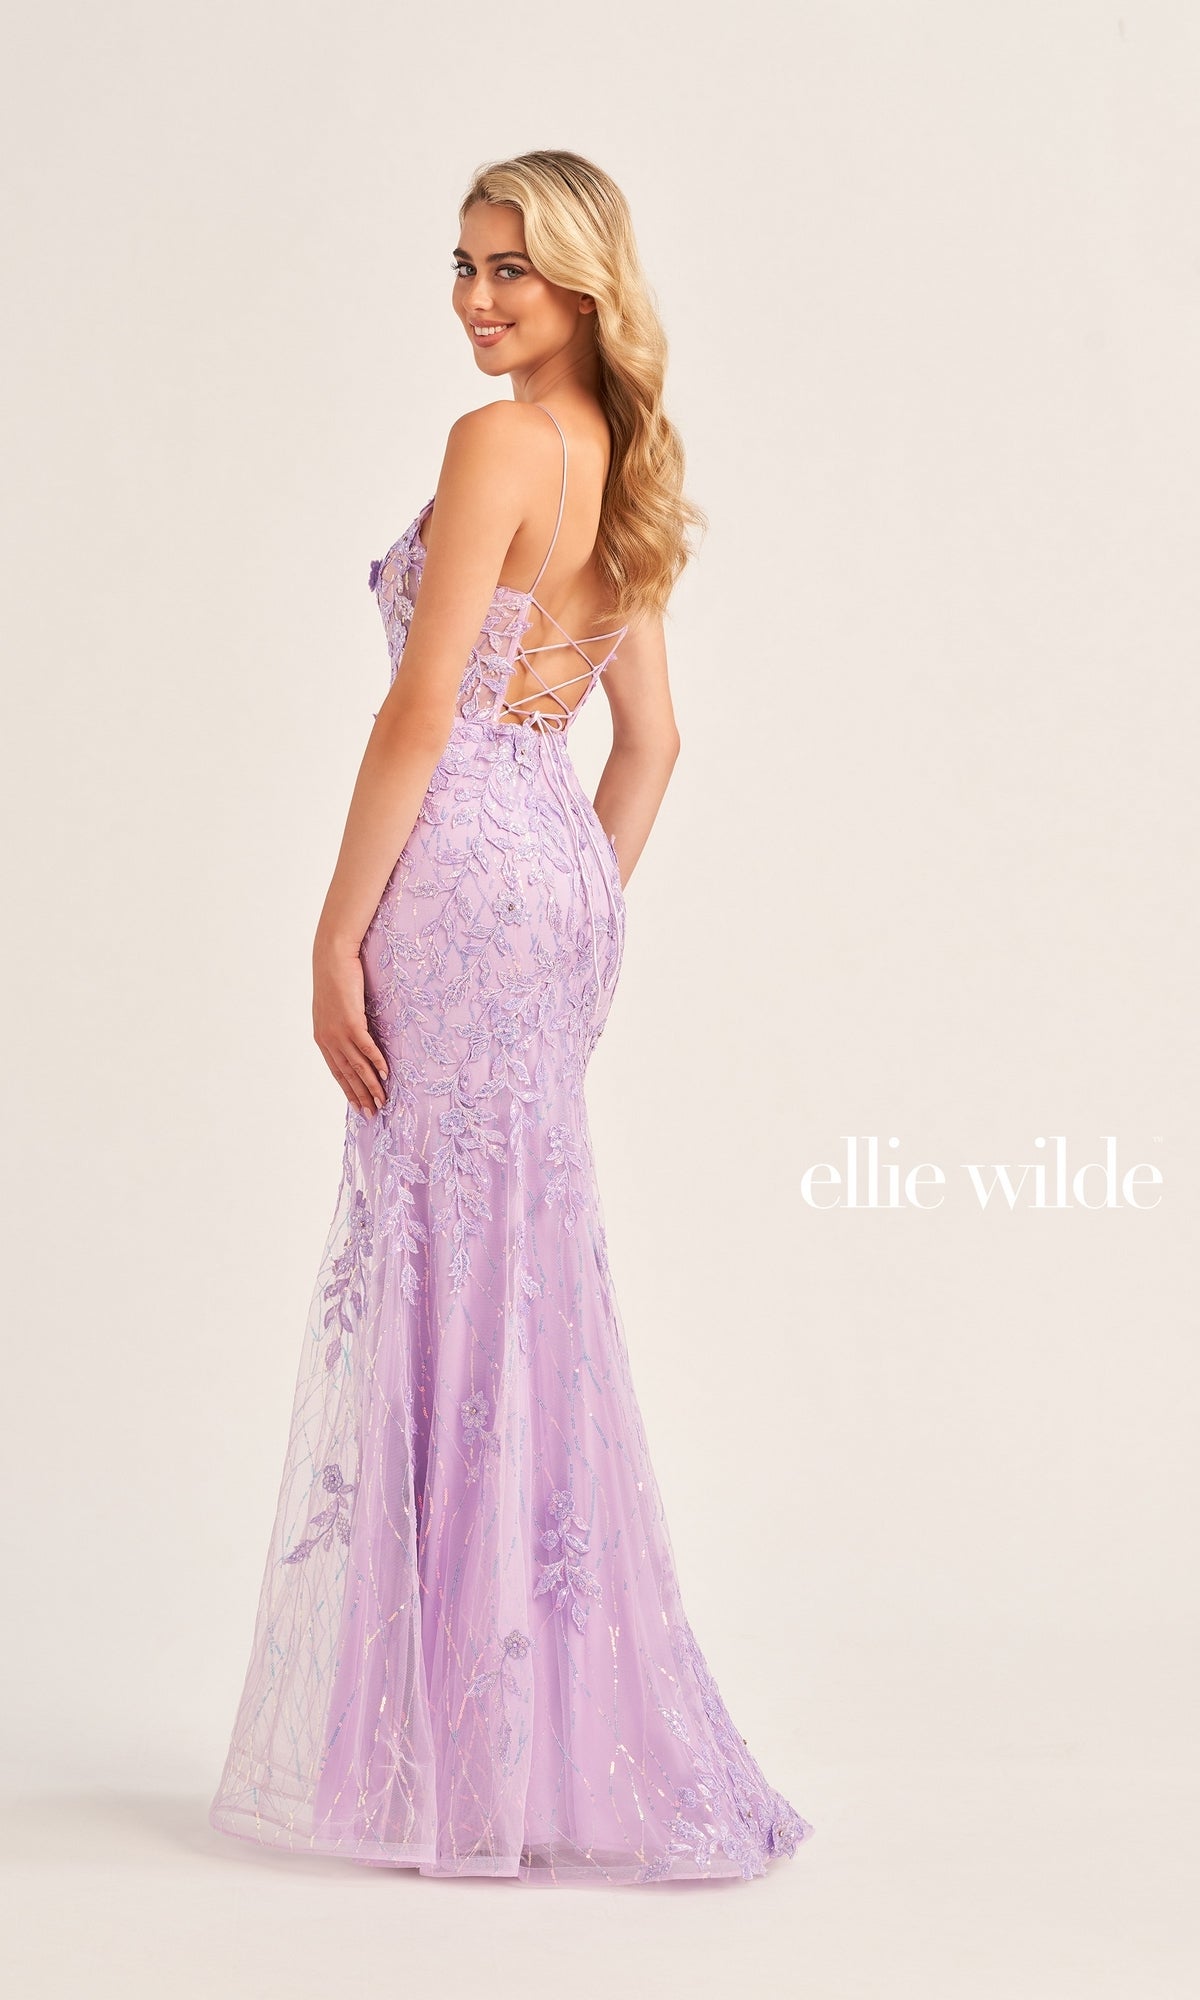 Ellie Wilde Designer Prom Dress with Train - PromGirl